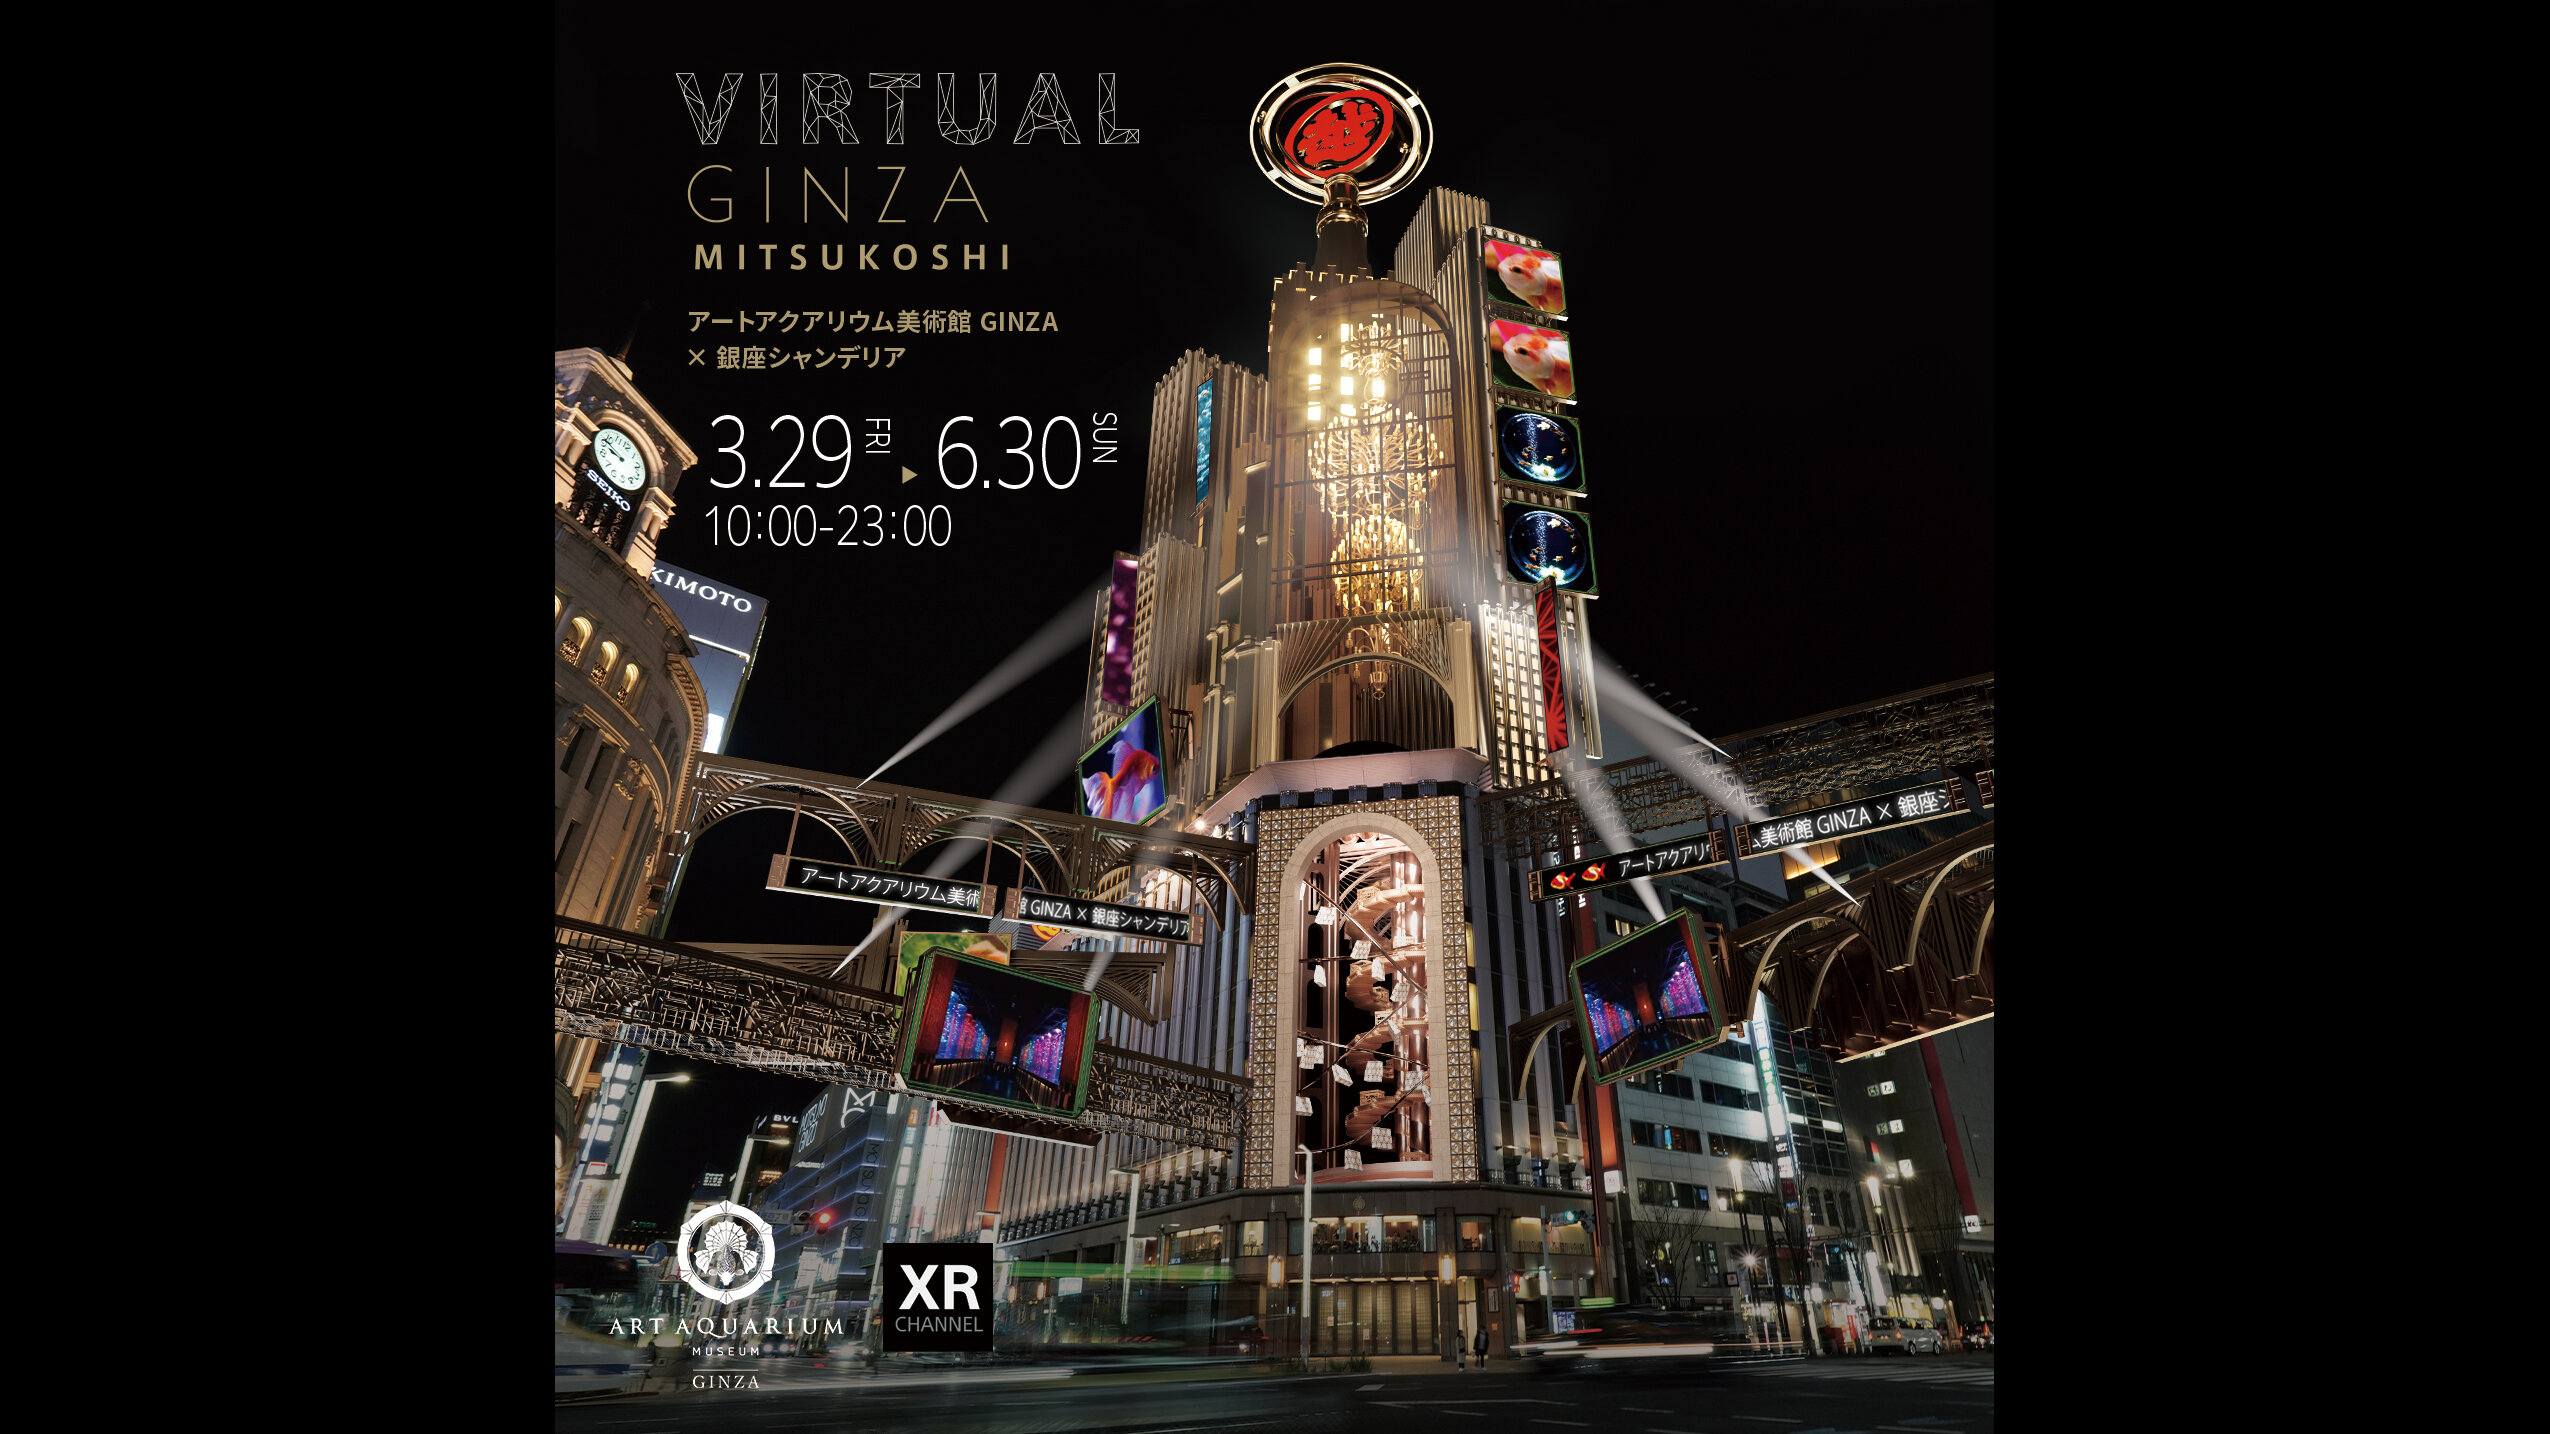 「GINZA XR Media」の広告メニュー「Virtual Ginza mitsukoshi」に「アートアクアリウム美術館 GINZA」が登場！ 